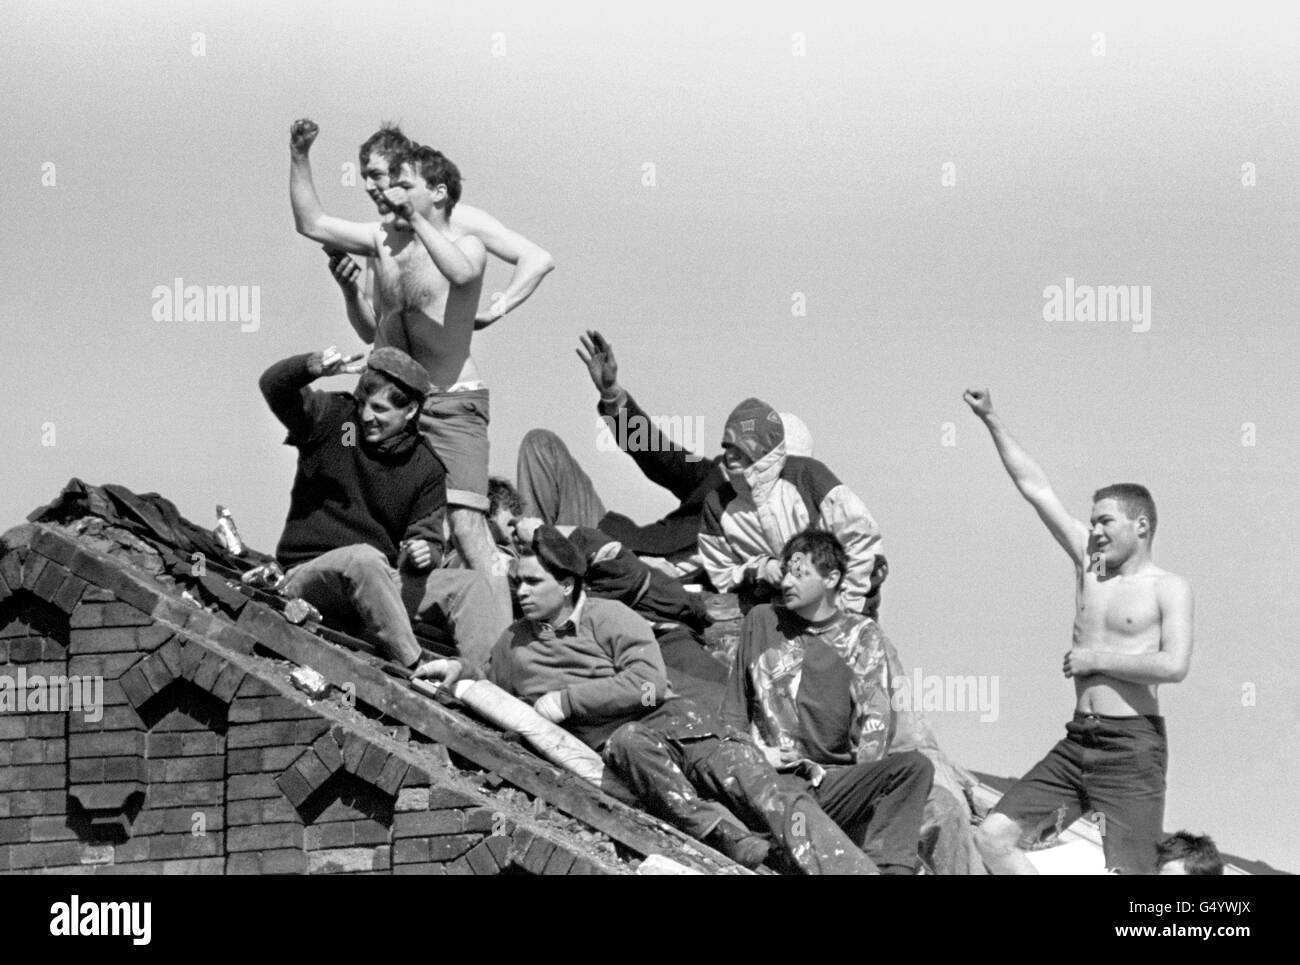 Crime - Strangeways Prison Riot - Manchester Stock Photo